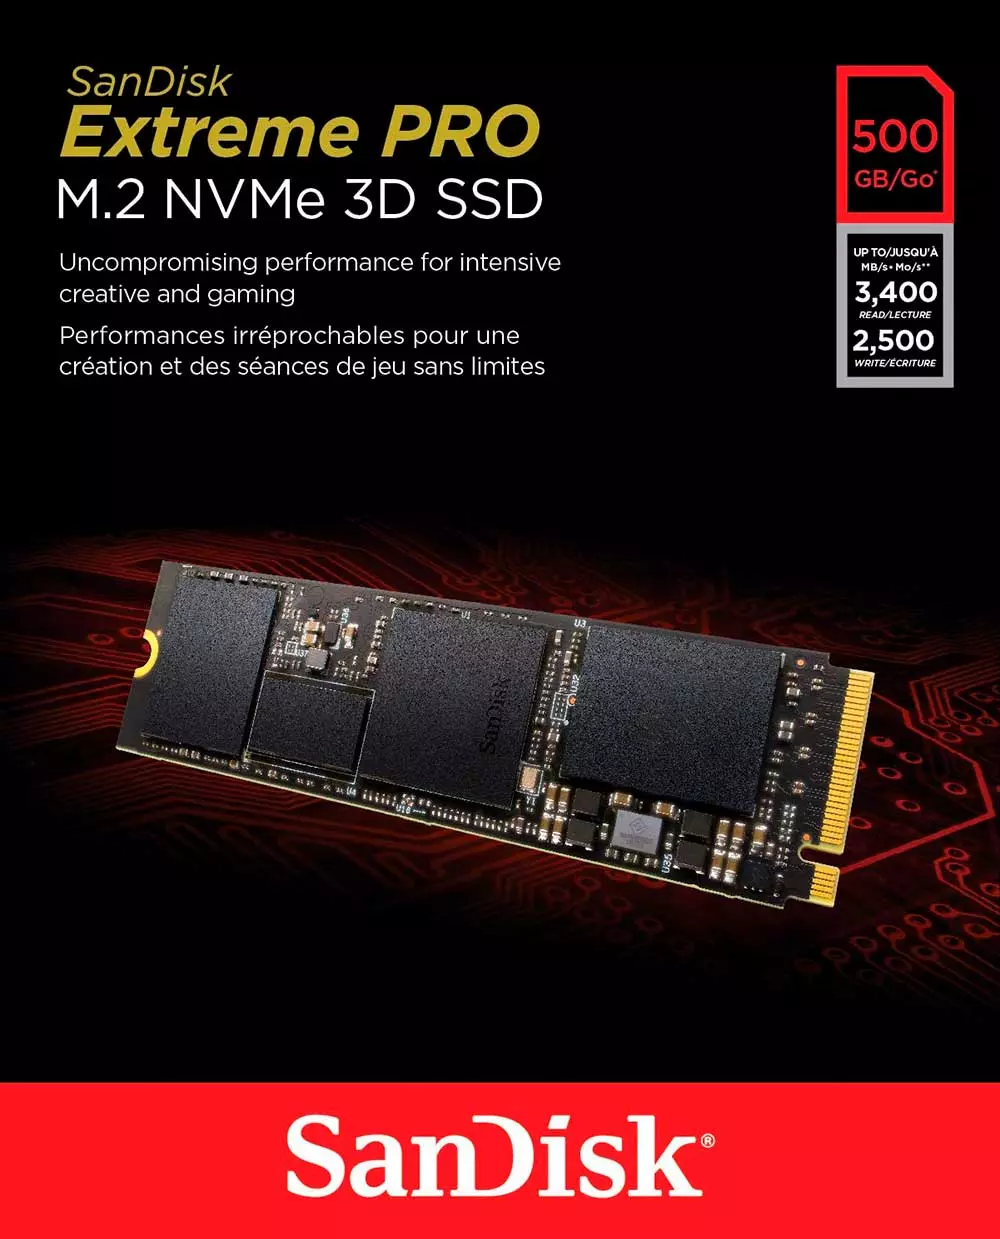 SanDisk-Extreme-Pro-500-GB